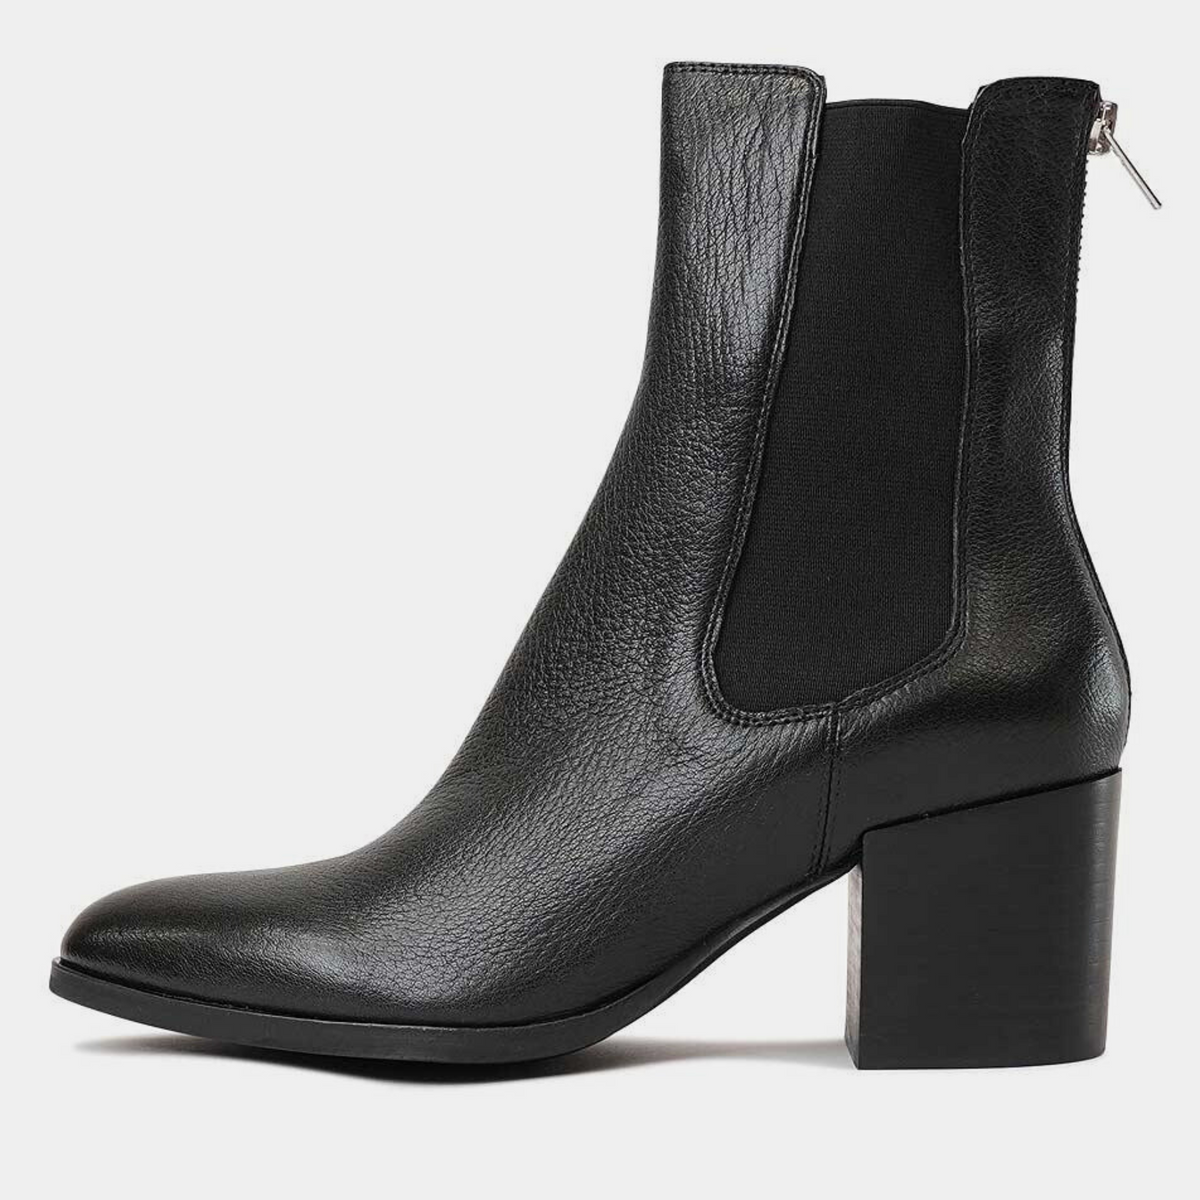 Zoltan Black / Black Leather Chelsea Boots